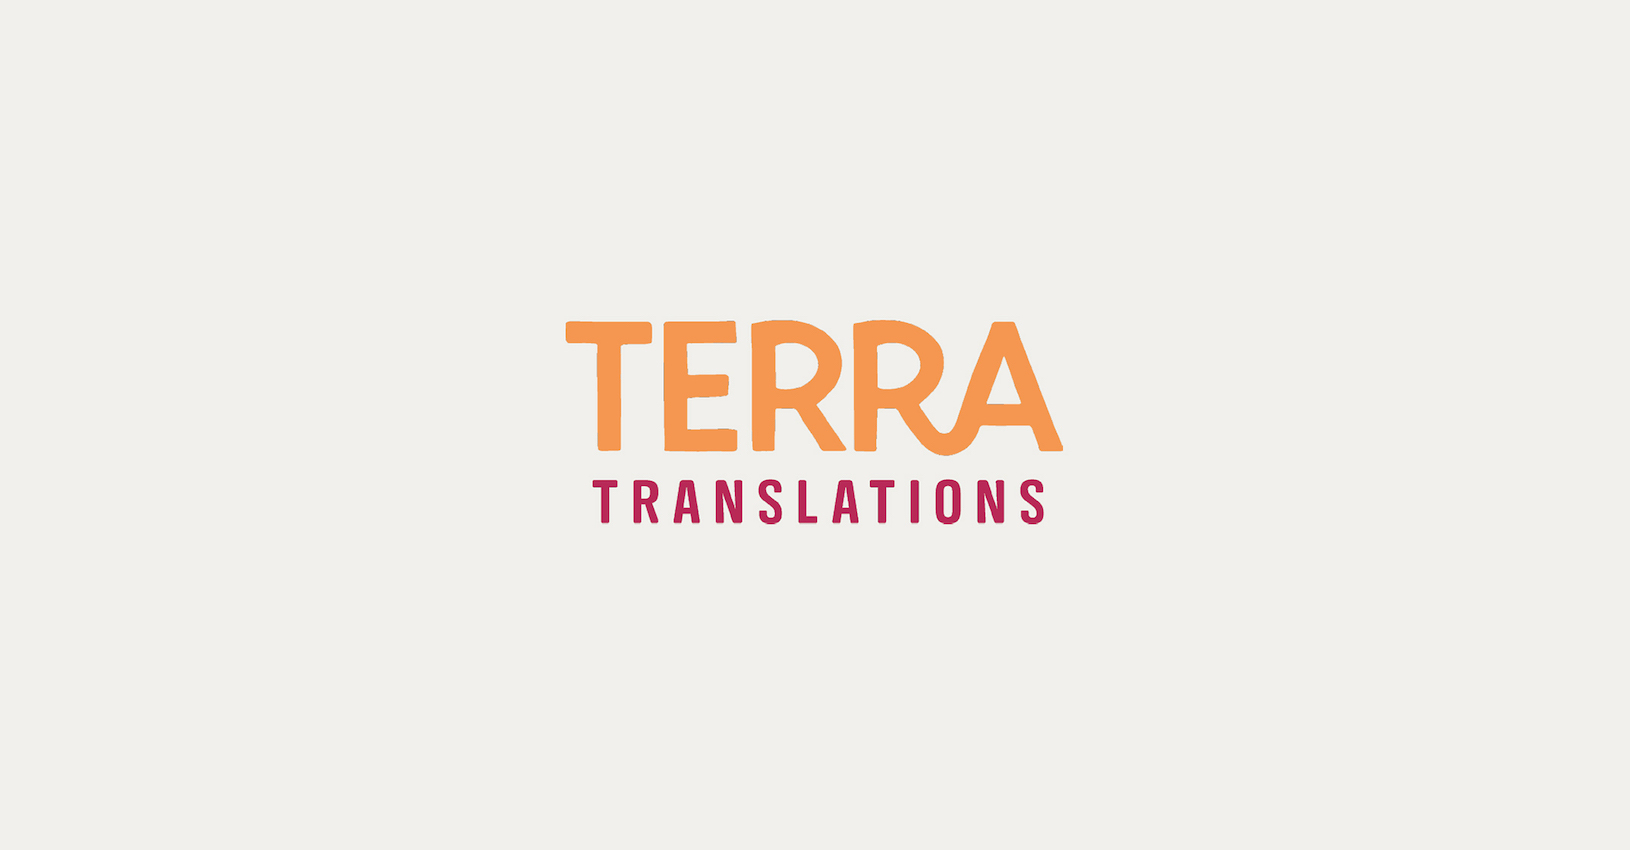 The terra translations logo.